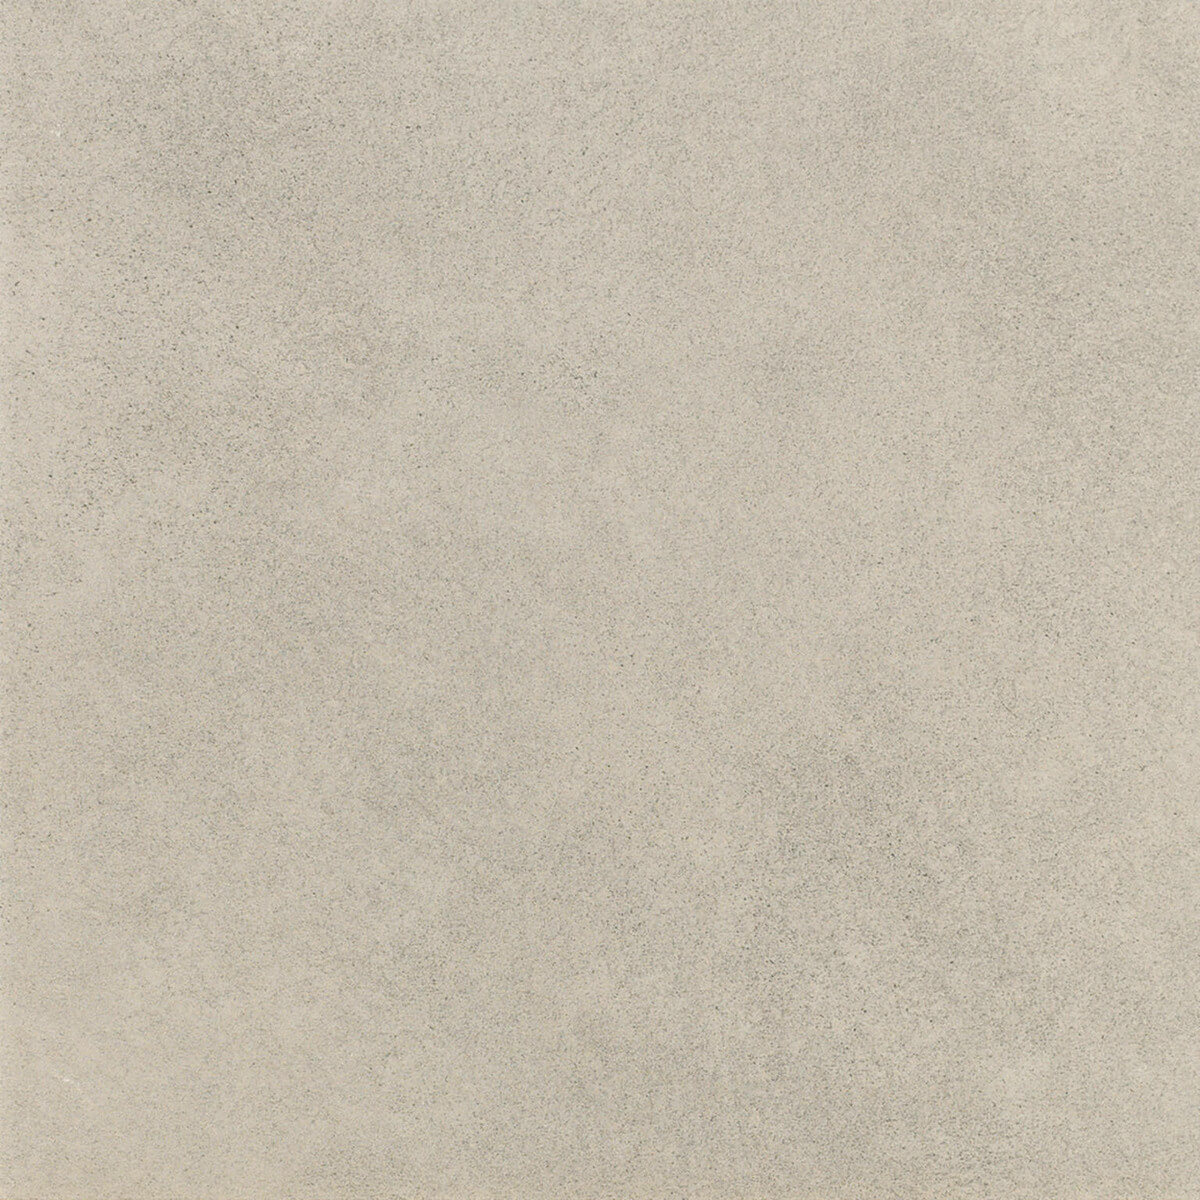 DOVER - Carrelage Sol Antidérapant Effet béton - Sand 33x33 - Réf.181118